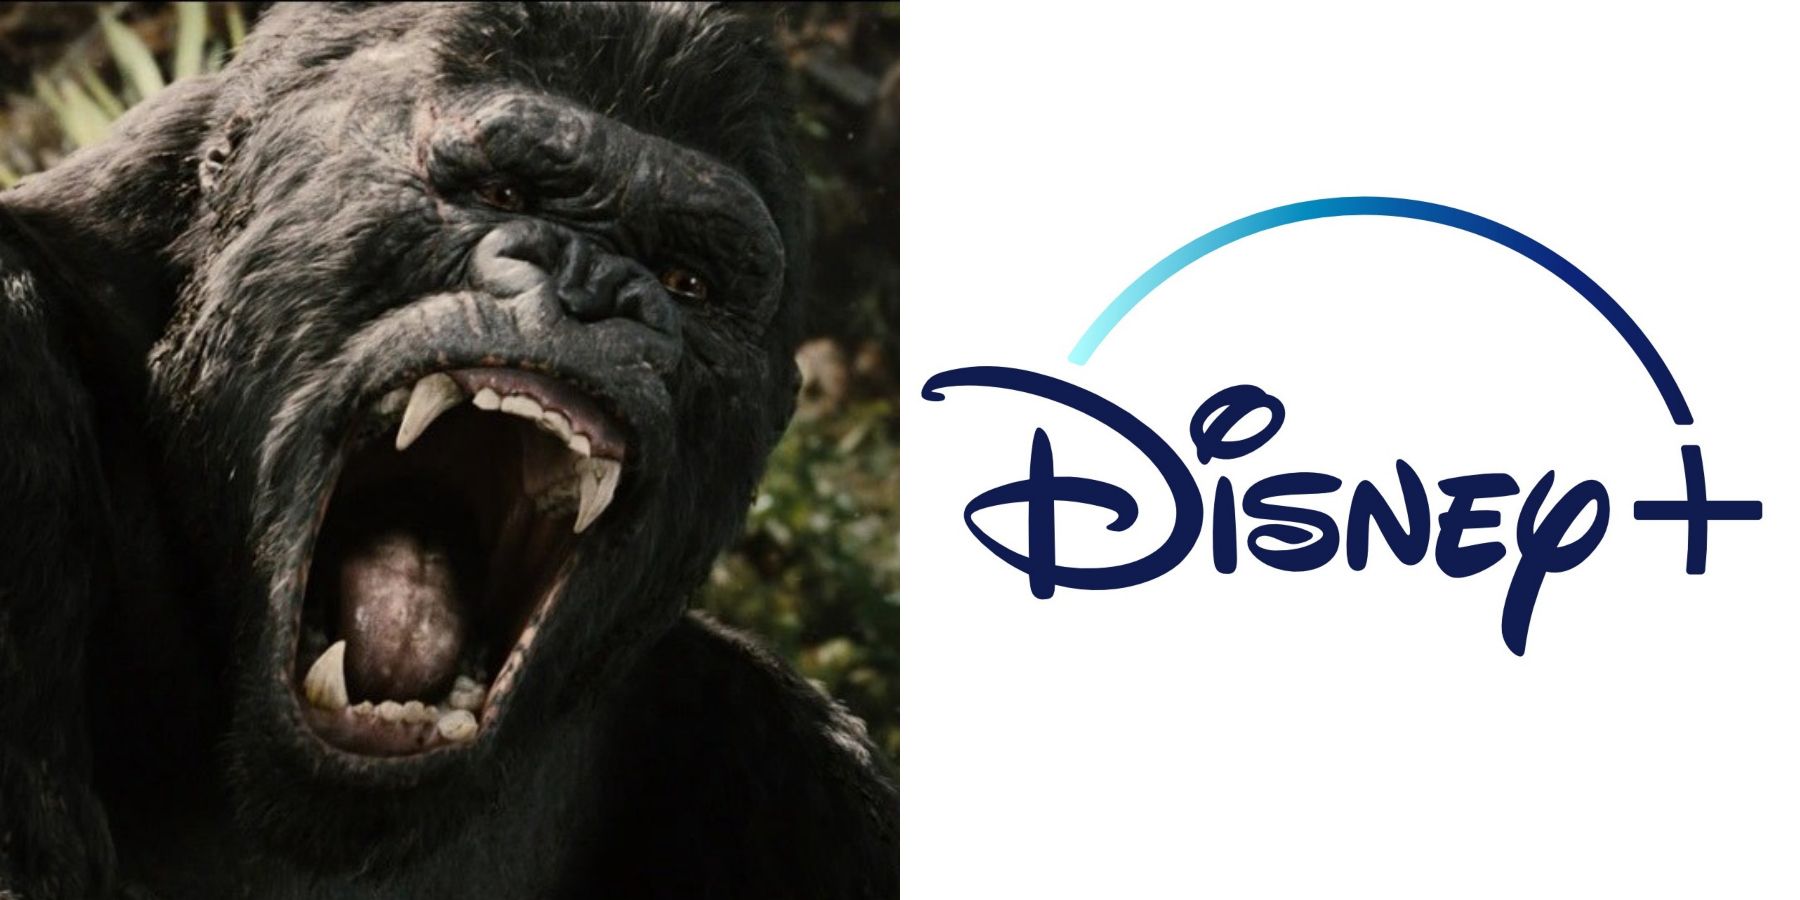 King Kong Disney Plus Series Coming From James Wan's Atomic Monster